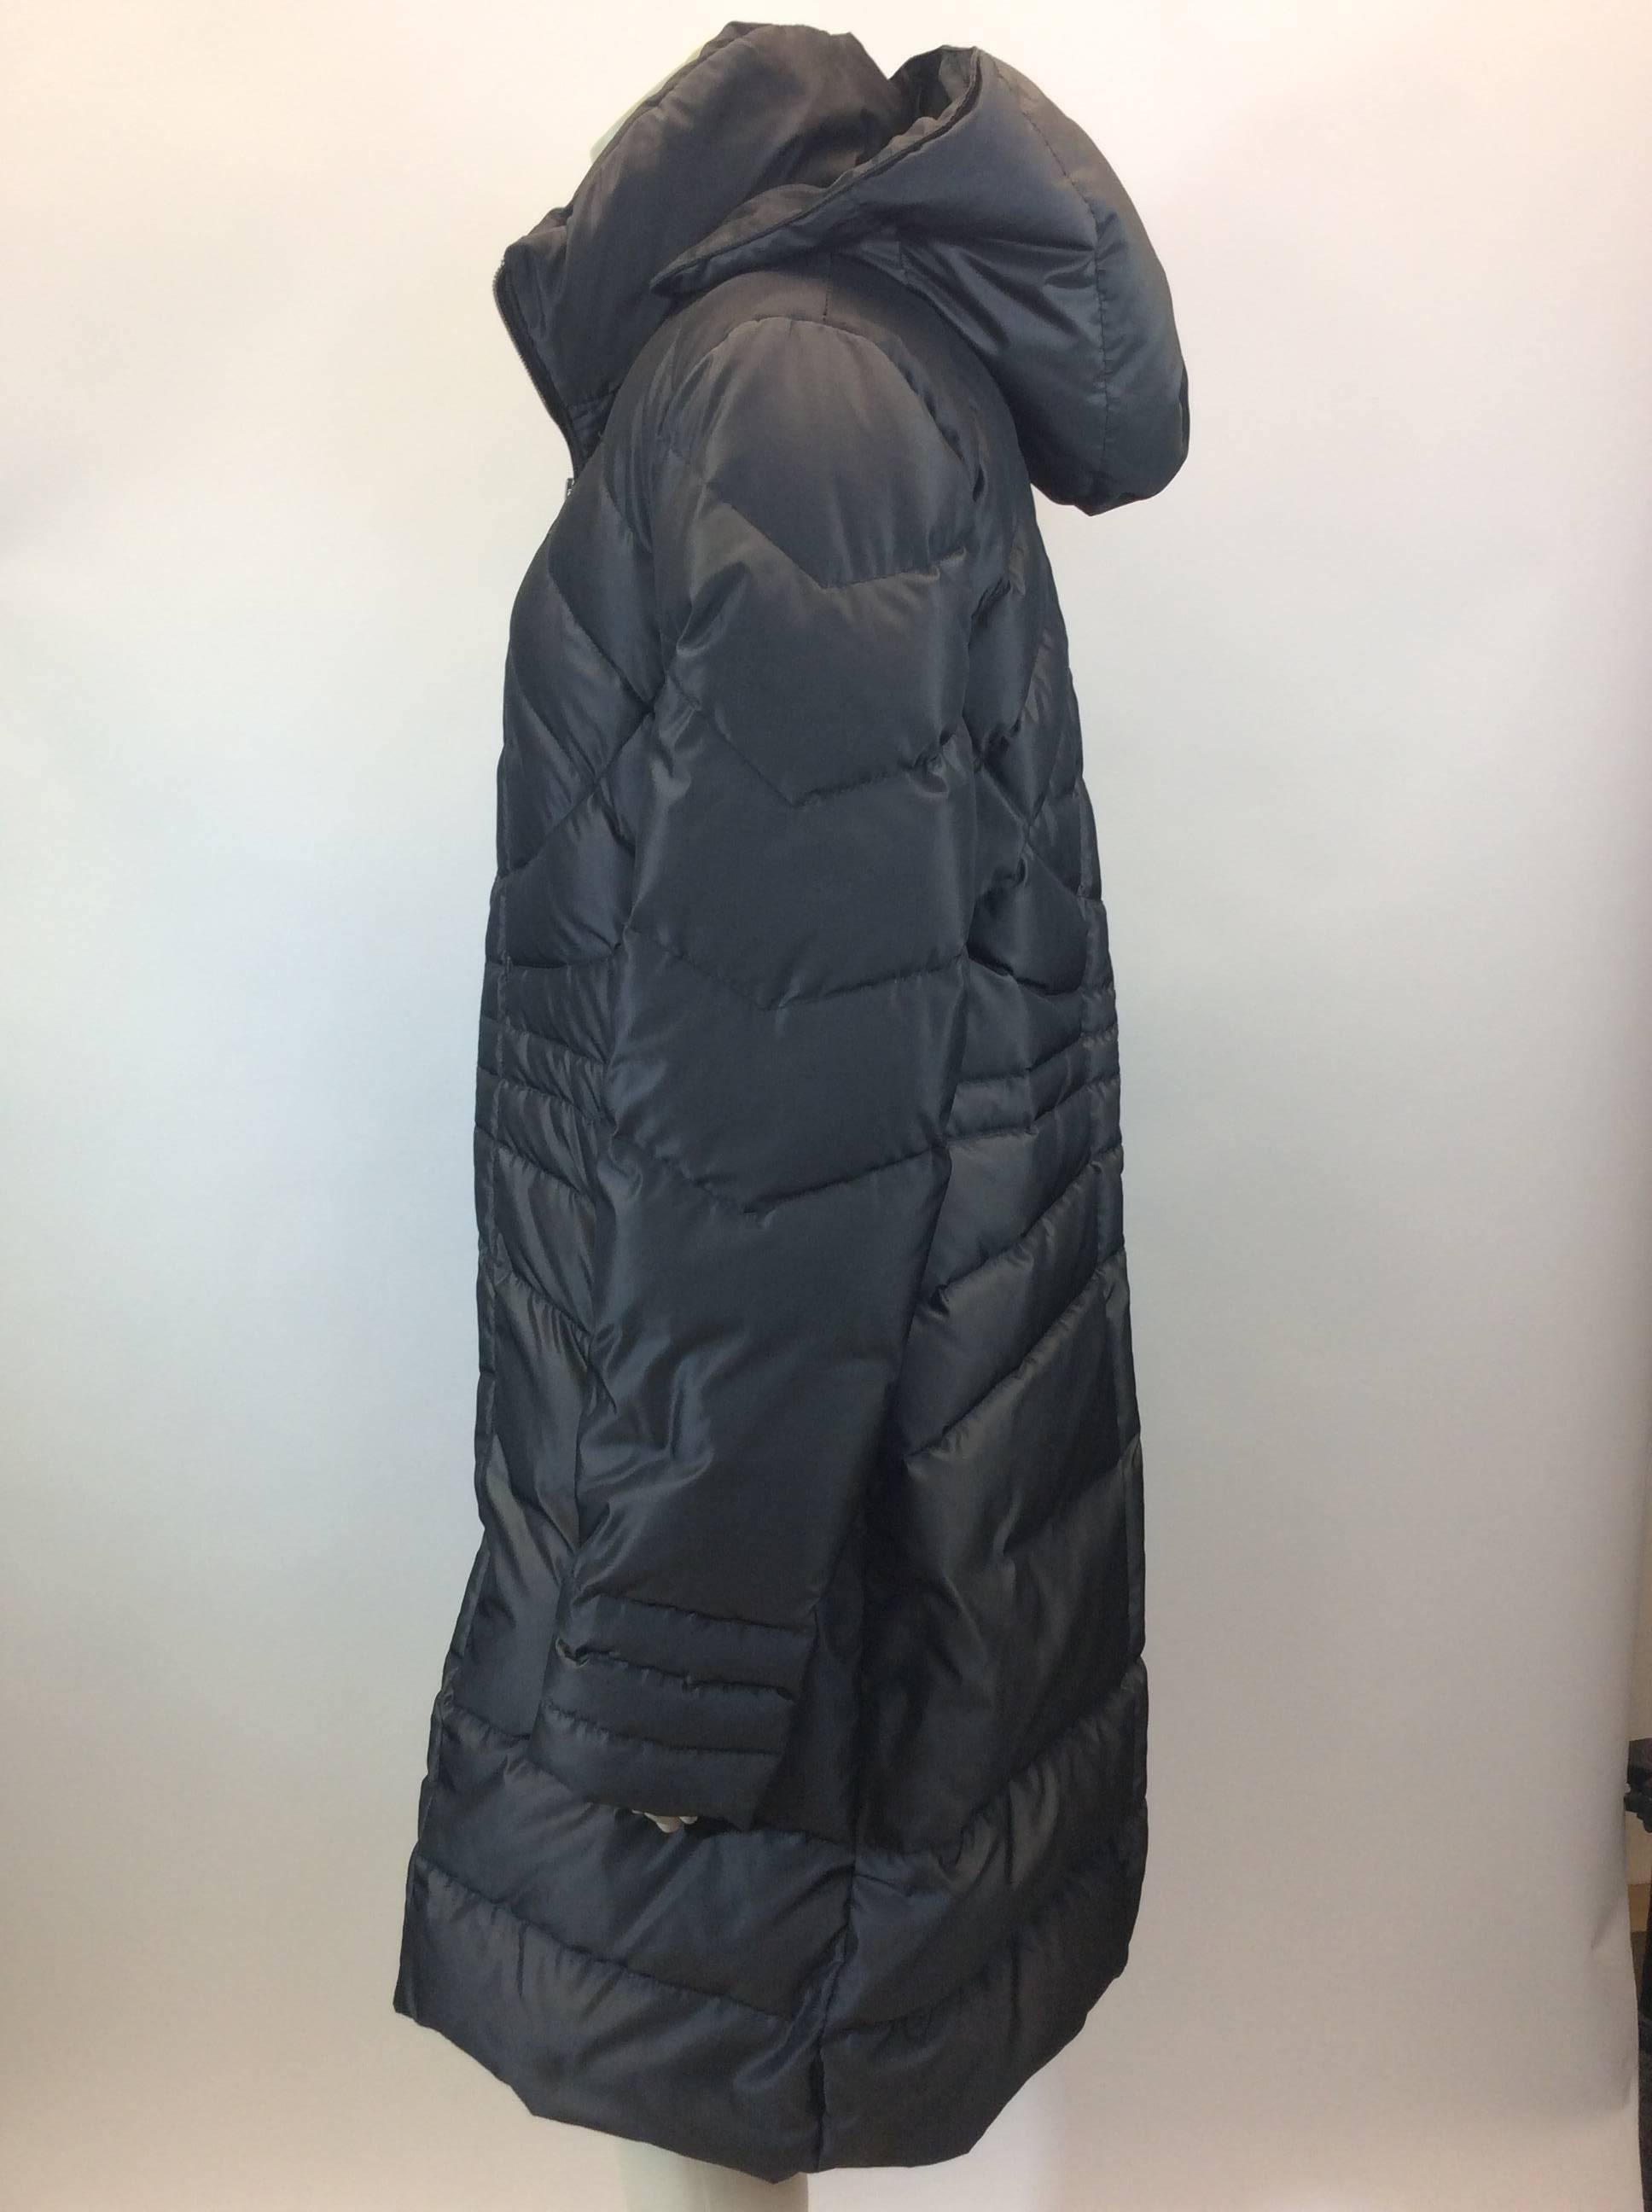 Moncler Grey Nylon Coat
$650
Made in Romania
Size 3
Length 36